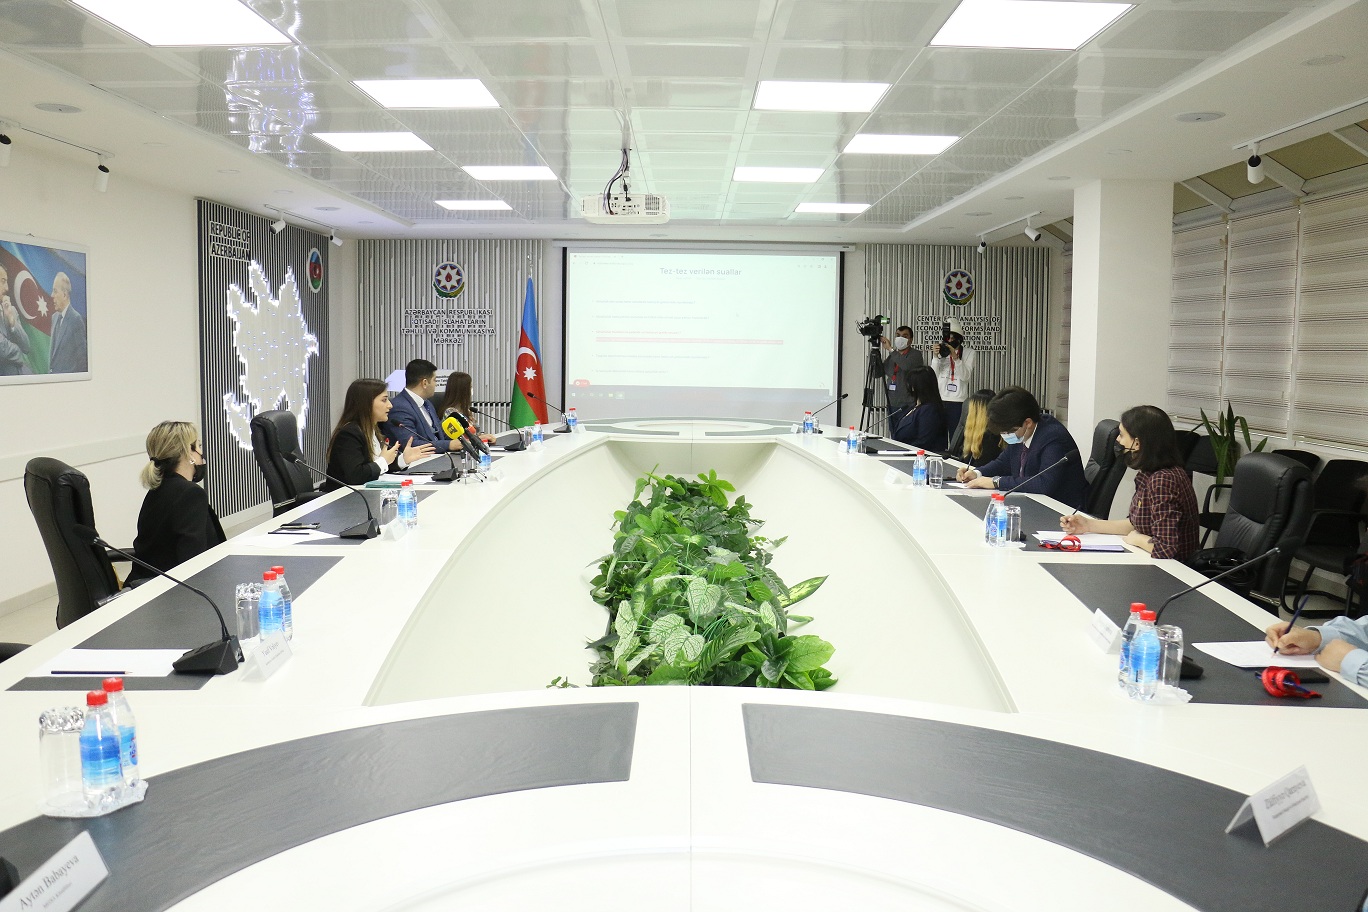 The website of the Reform Volunteers Organization was presented